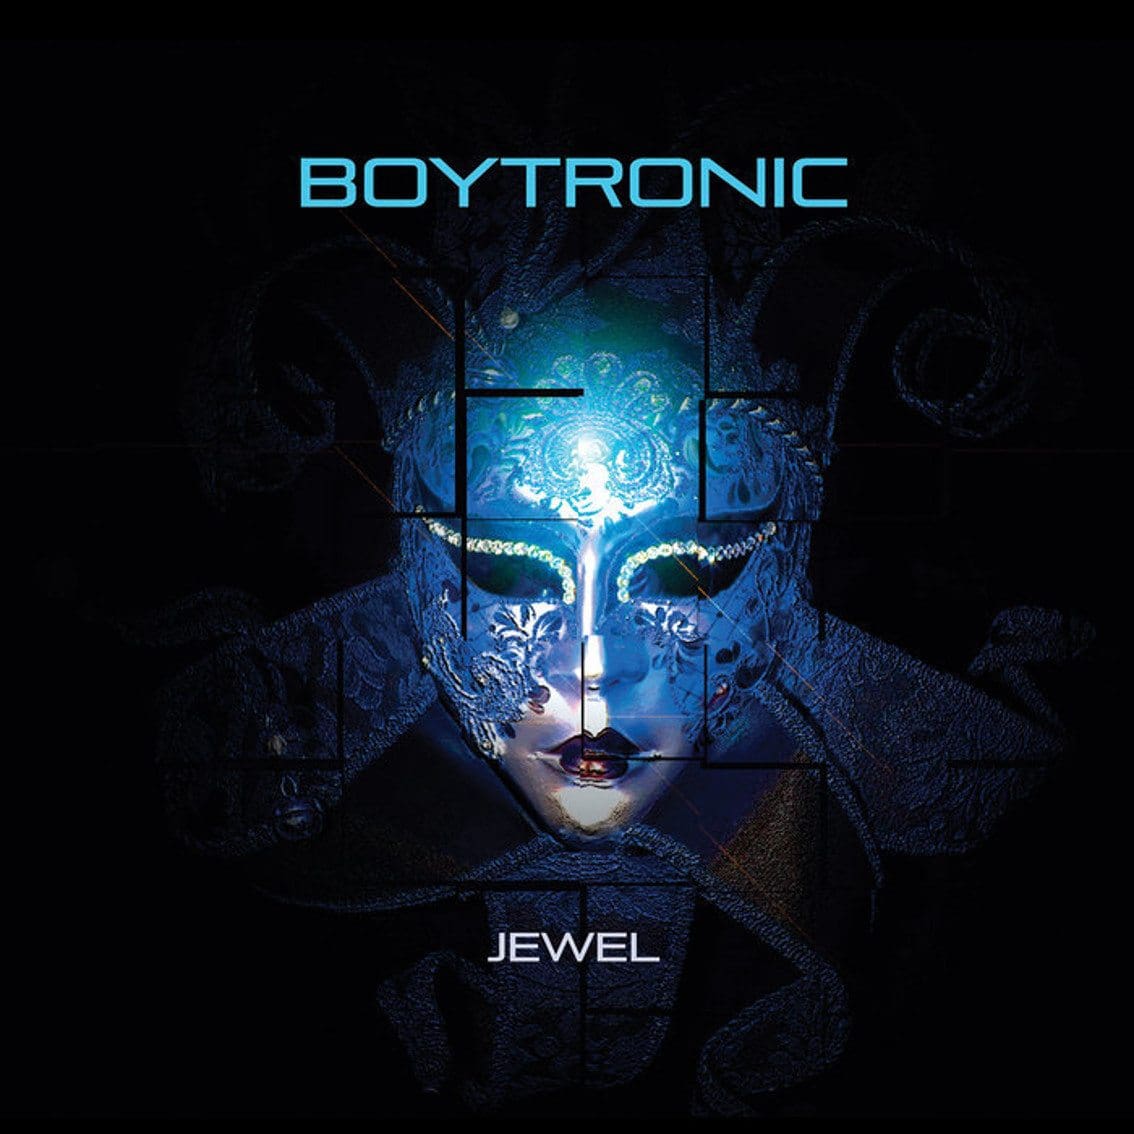 Boytronic prepare November release new album 'Jewel'